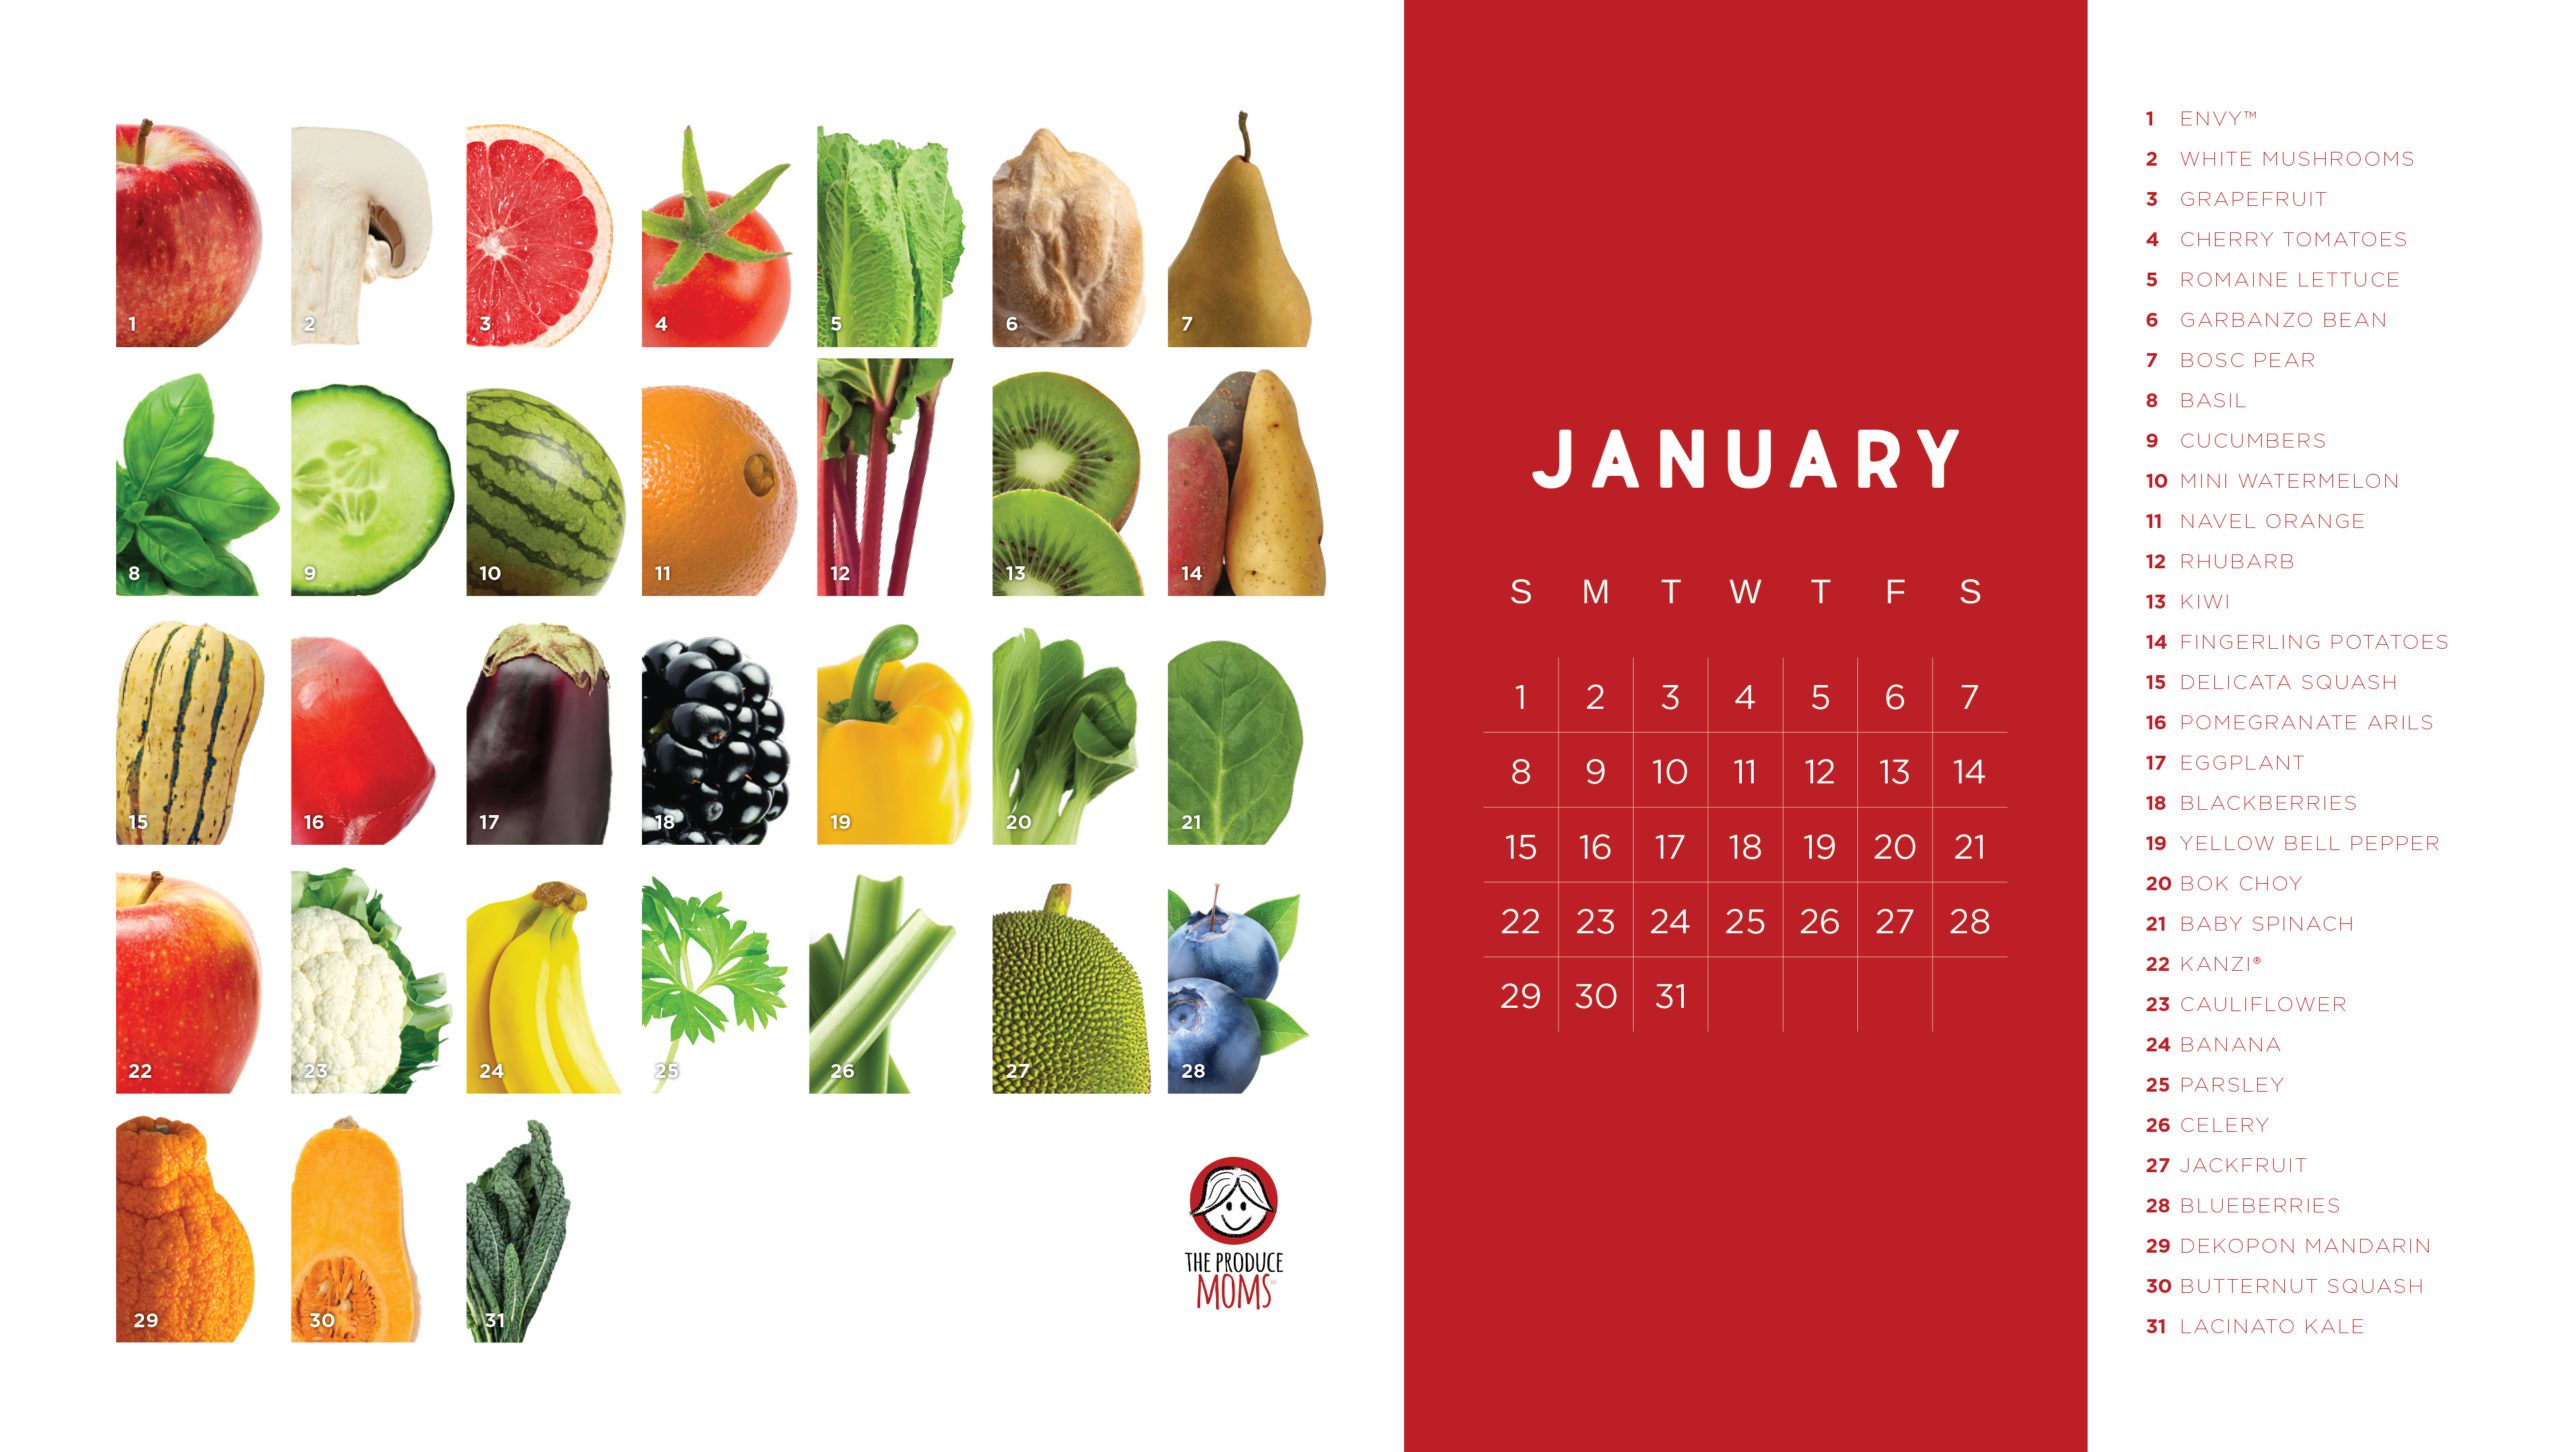 January Produce Challenge Image